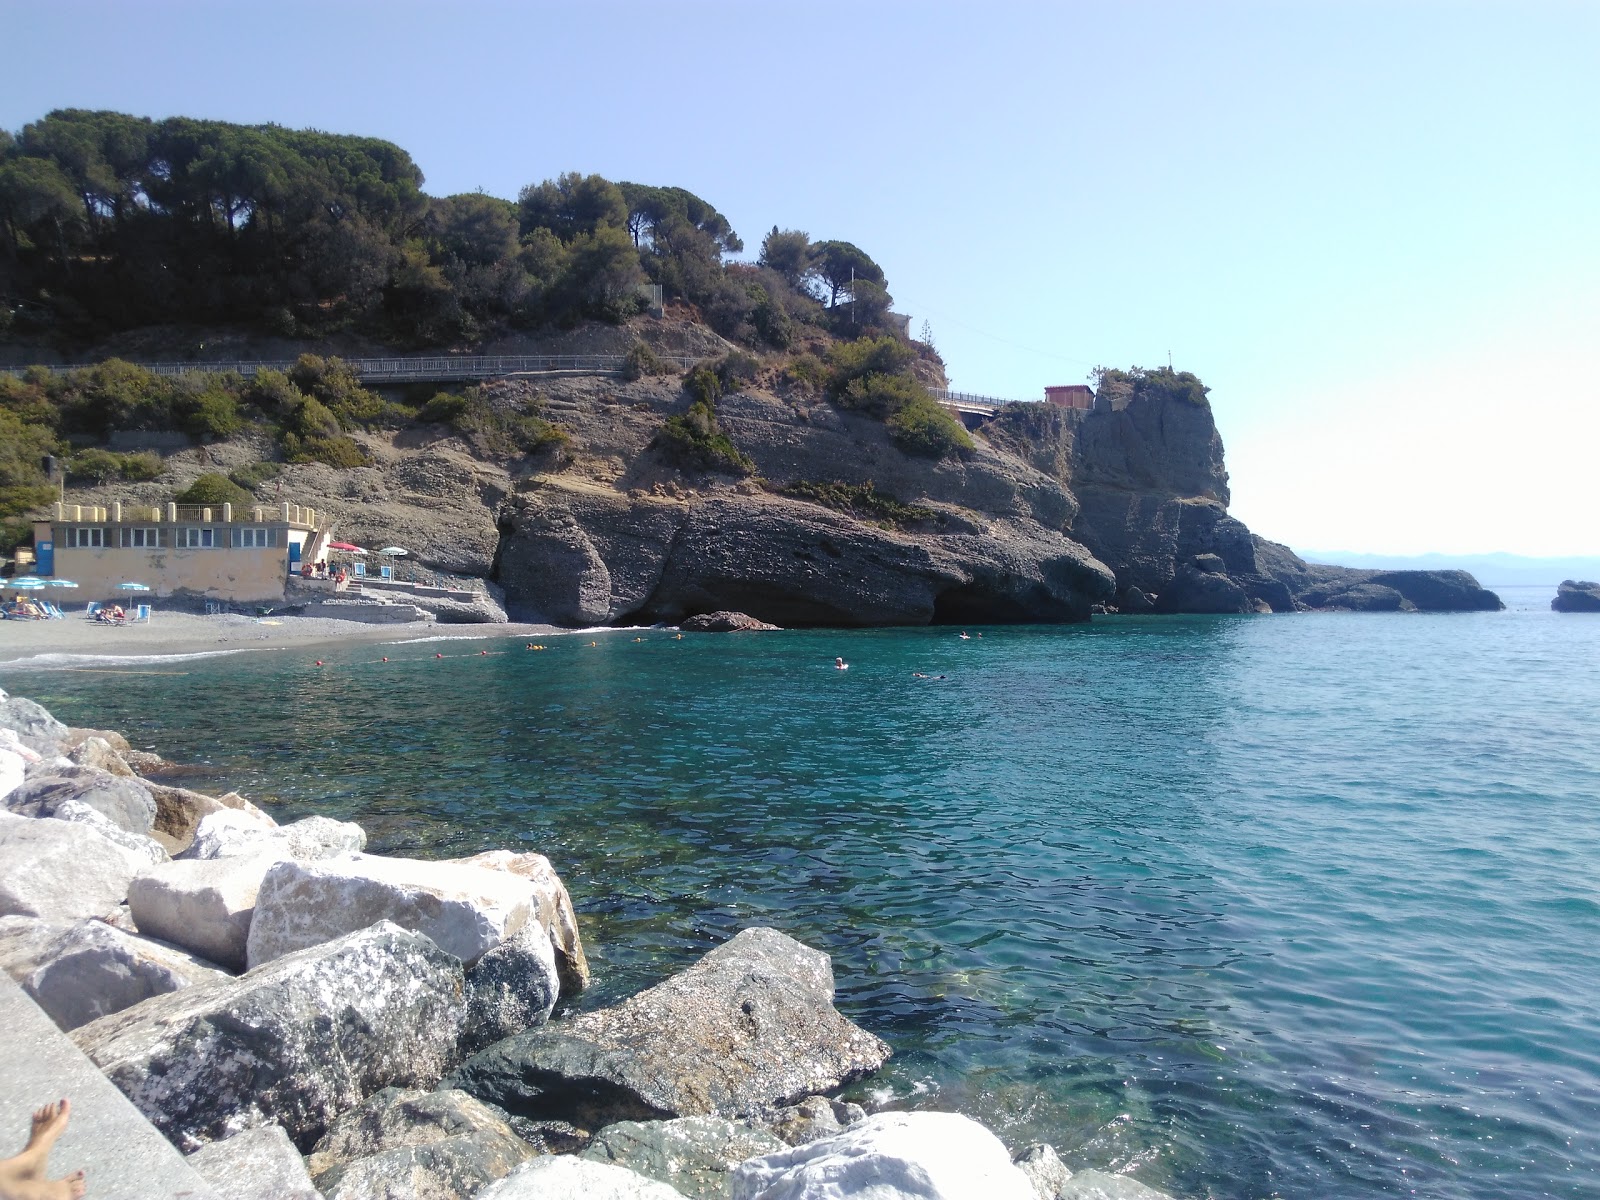 Spiaggia della Madonnetta'in fotoğrafı doğrudan plaj ile birlikte